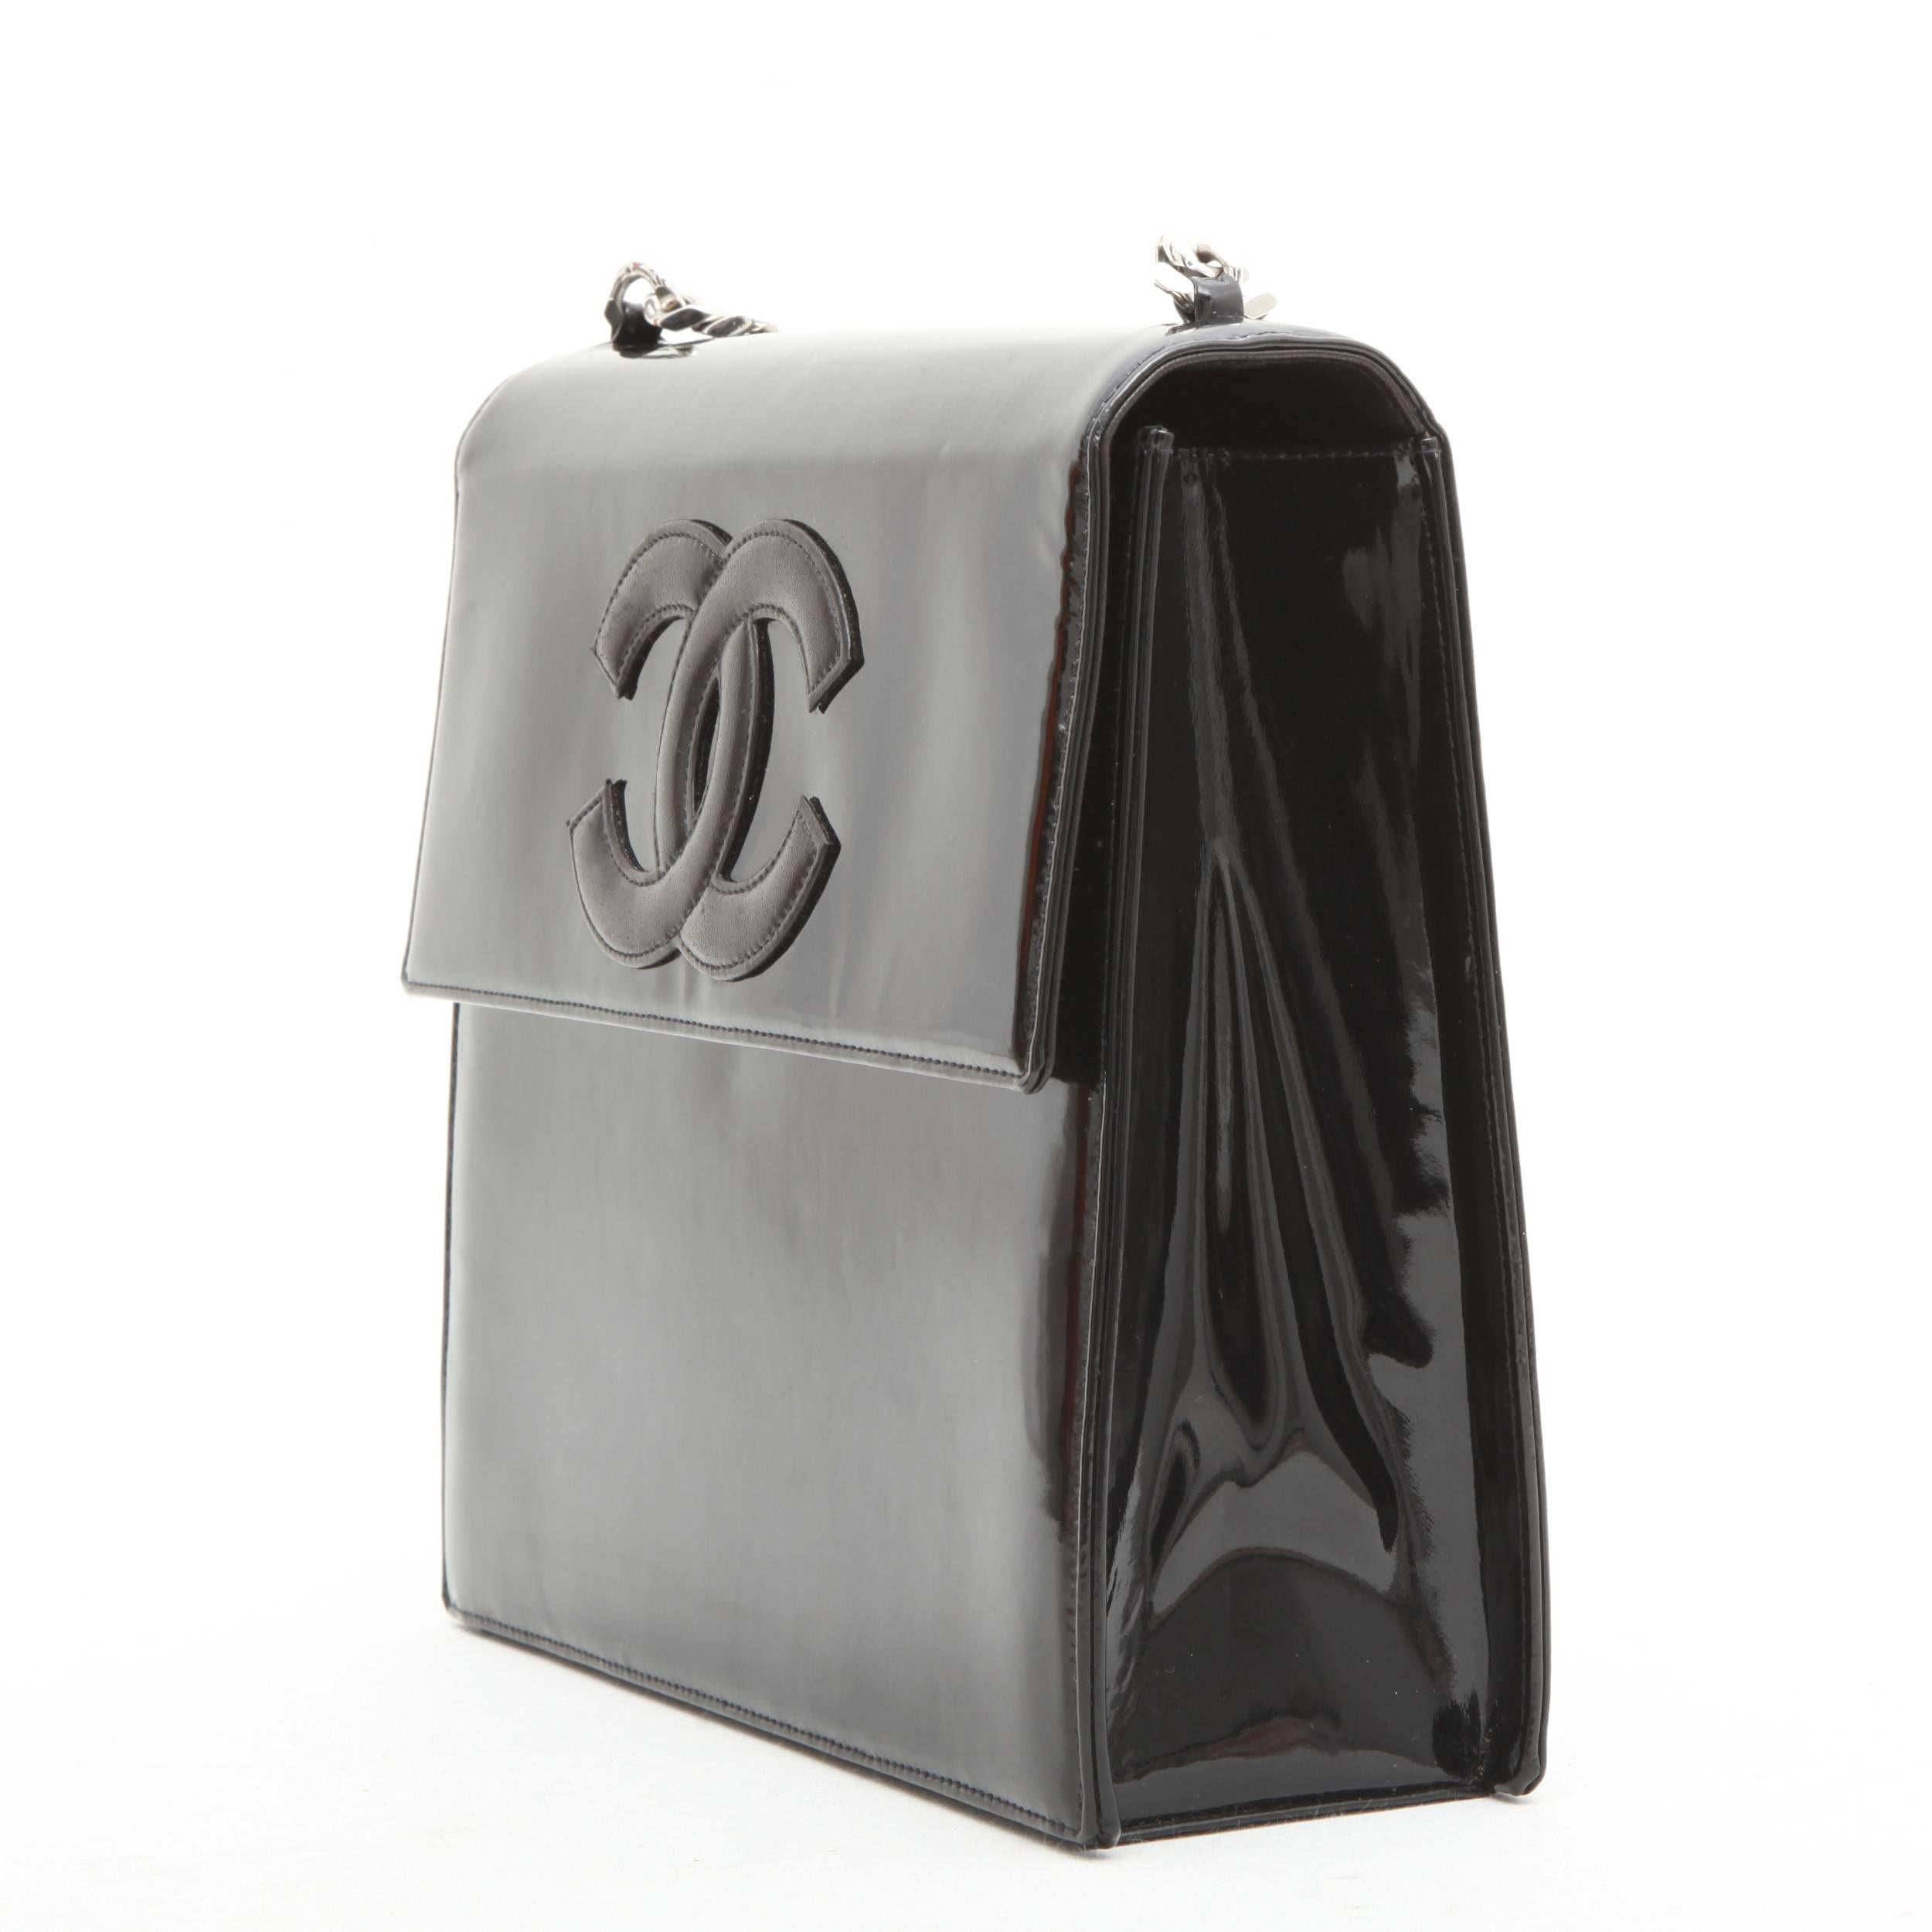 Vintage CHANEL Flap Bag in Black Patent Leather 1